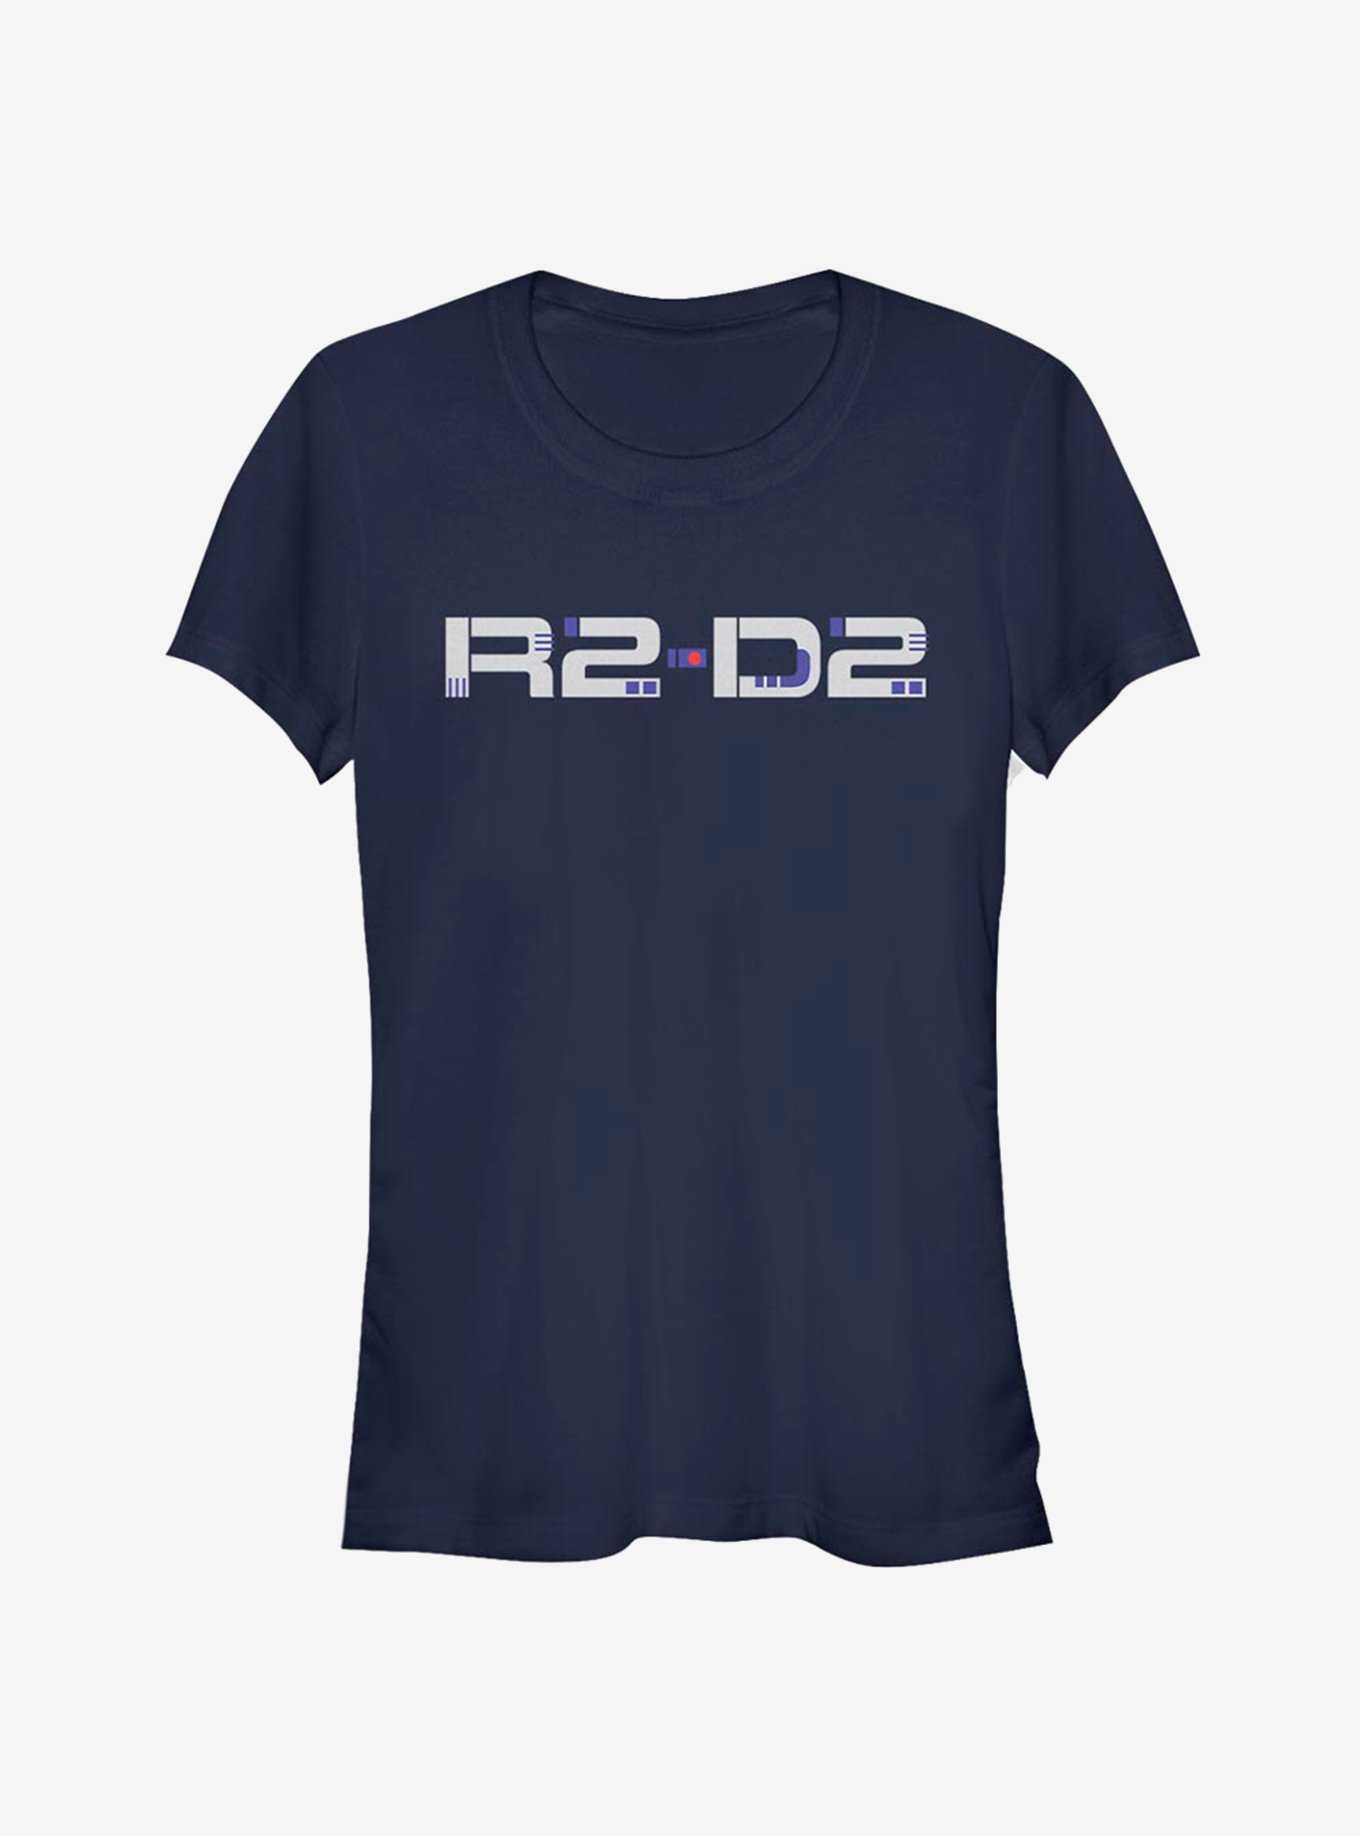 Star Wars Droid Design Girls T-Shirt, , hi-res